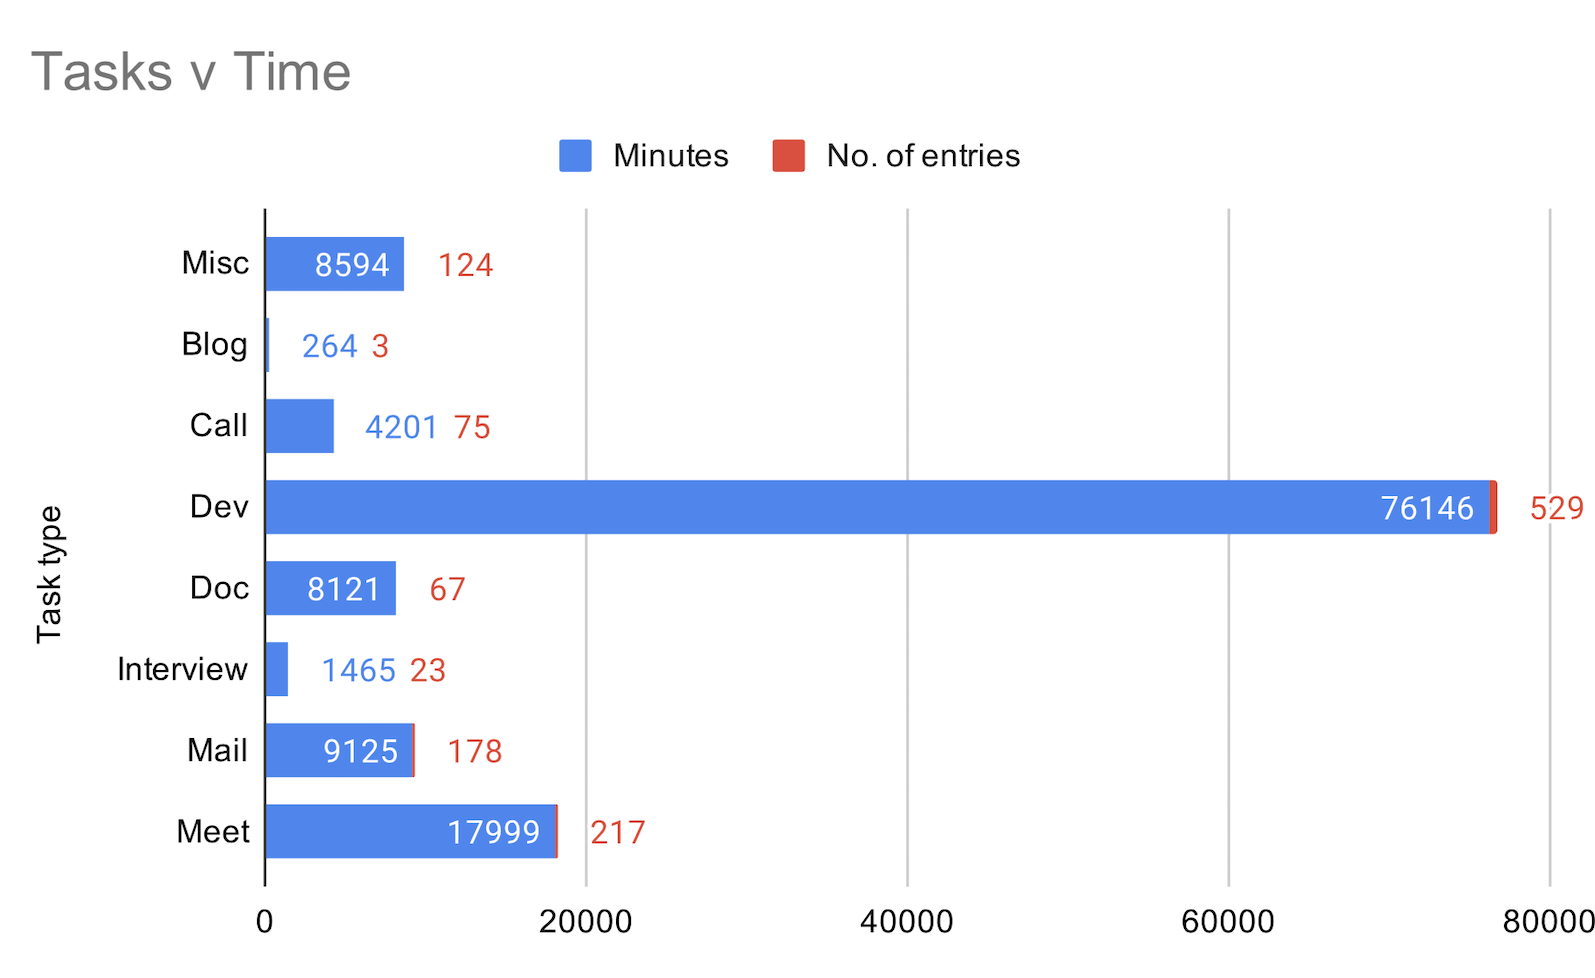 tasks vs time - bar chart